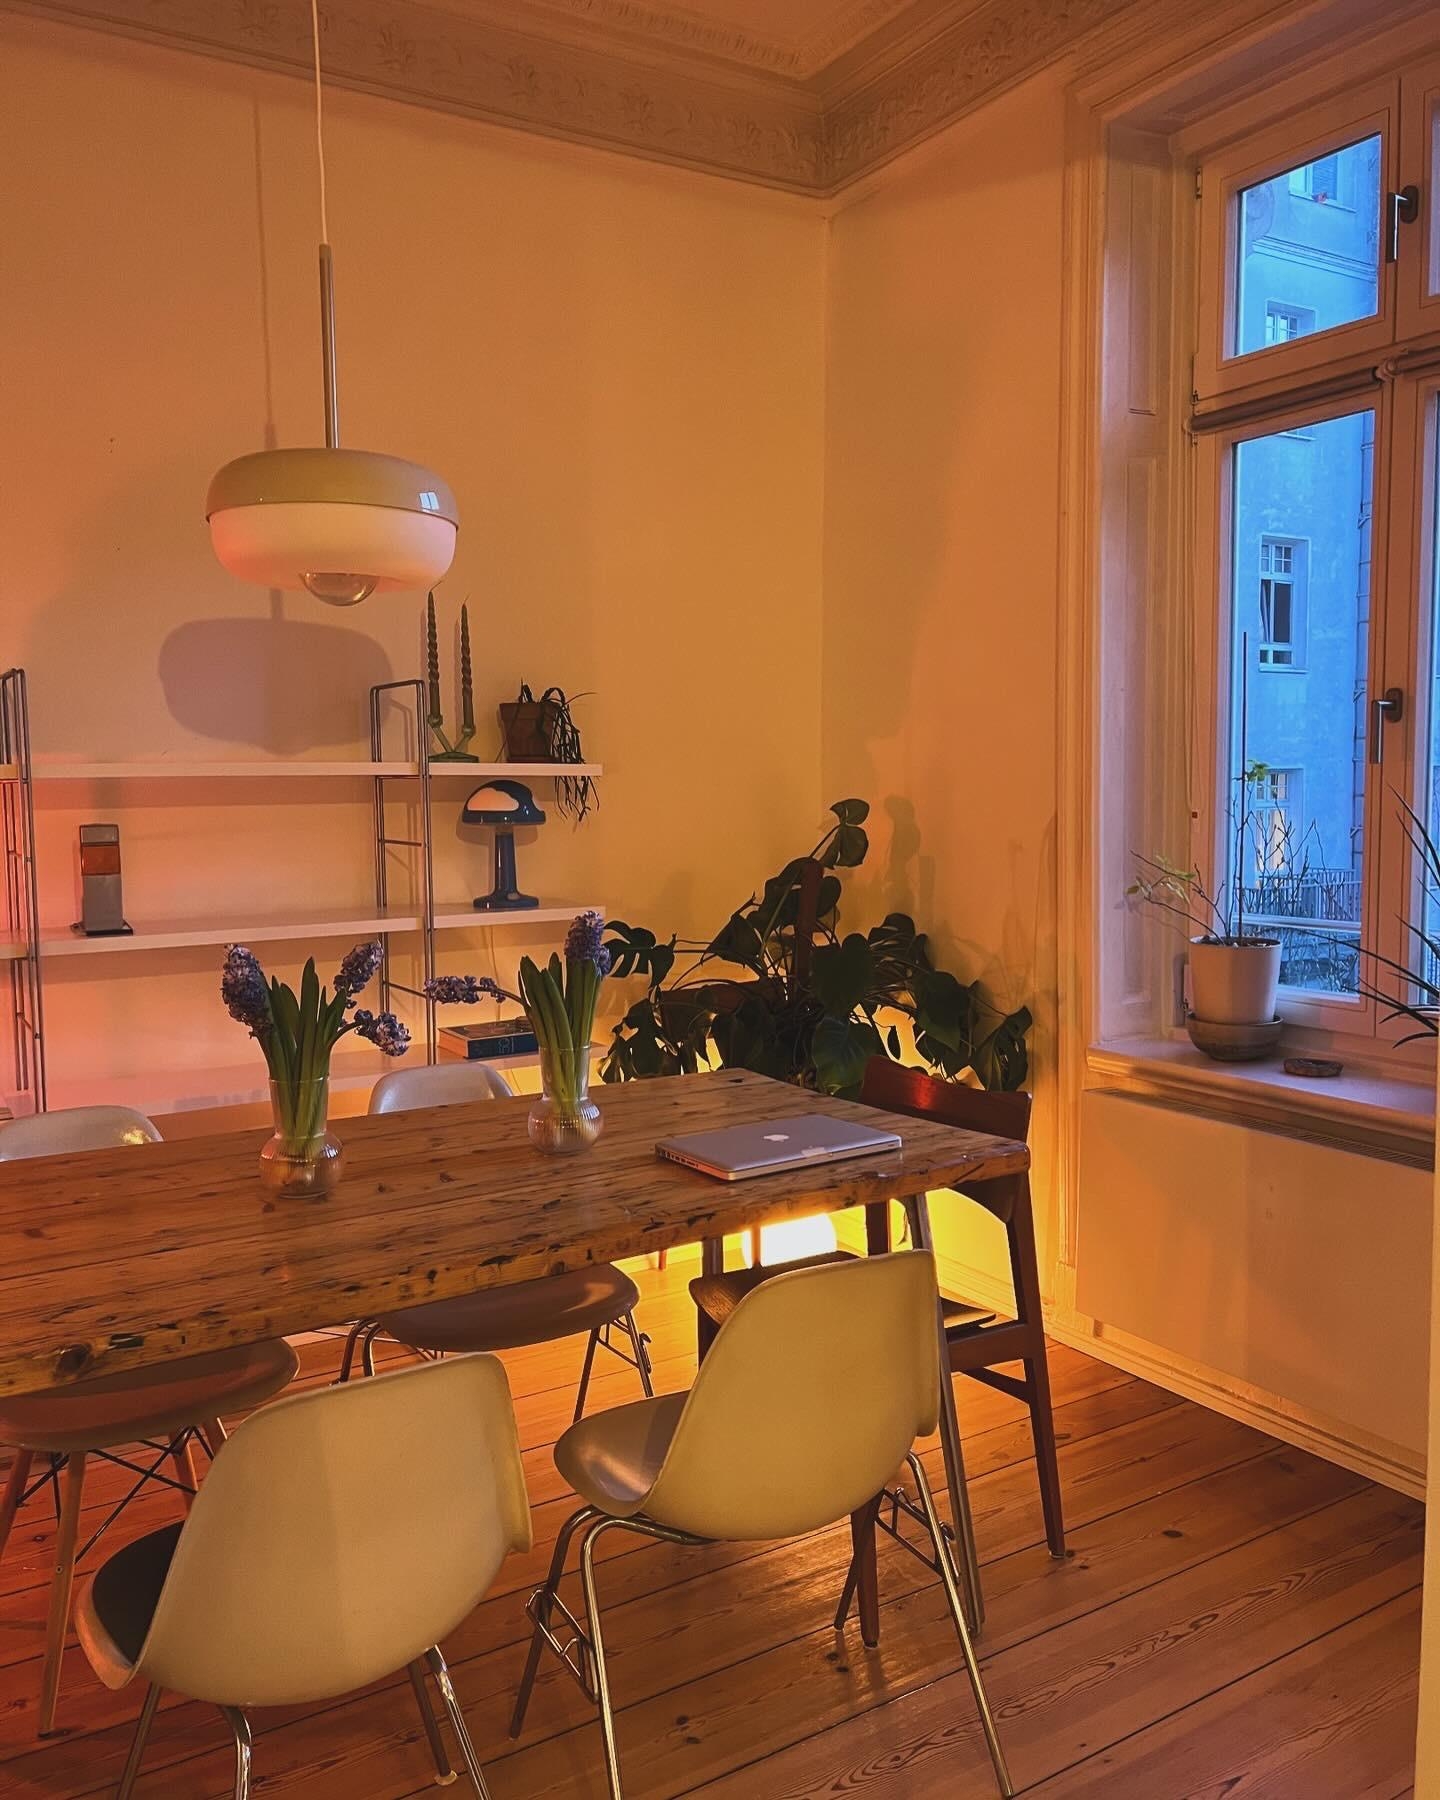 Lieblingsecke Esszimmer 💕 

#ambient #esszimmerinspo #home #interior #nielsgammelgaard 